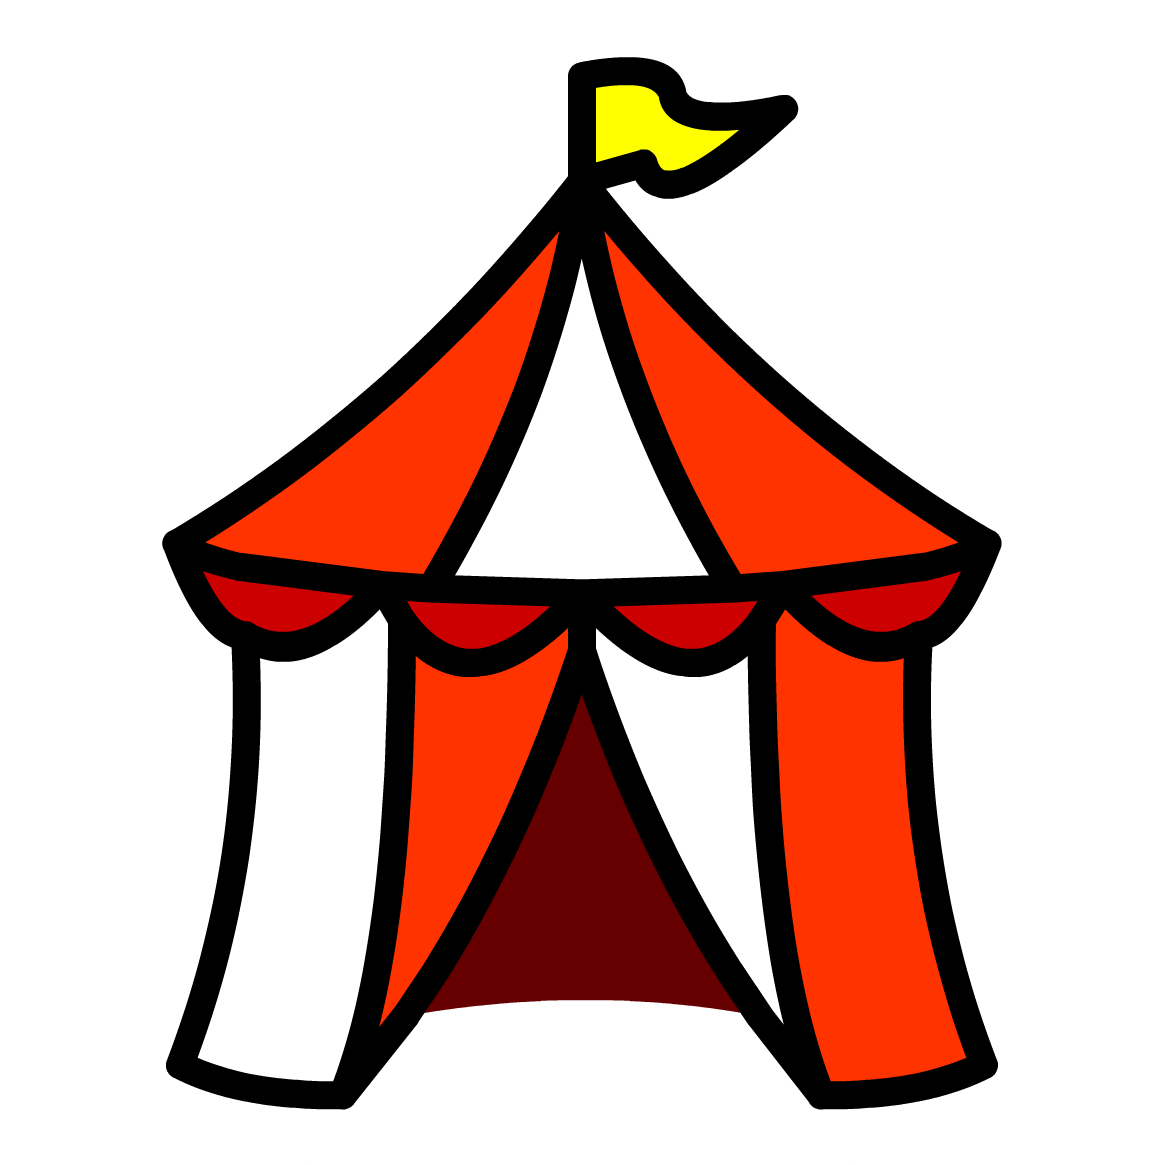 Circus Tent pin - Club Penguin Wiki - The free, editable 